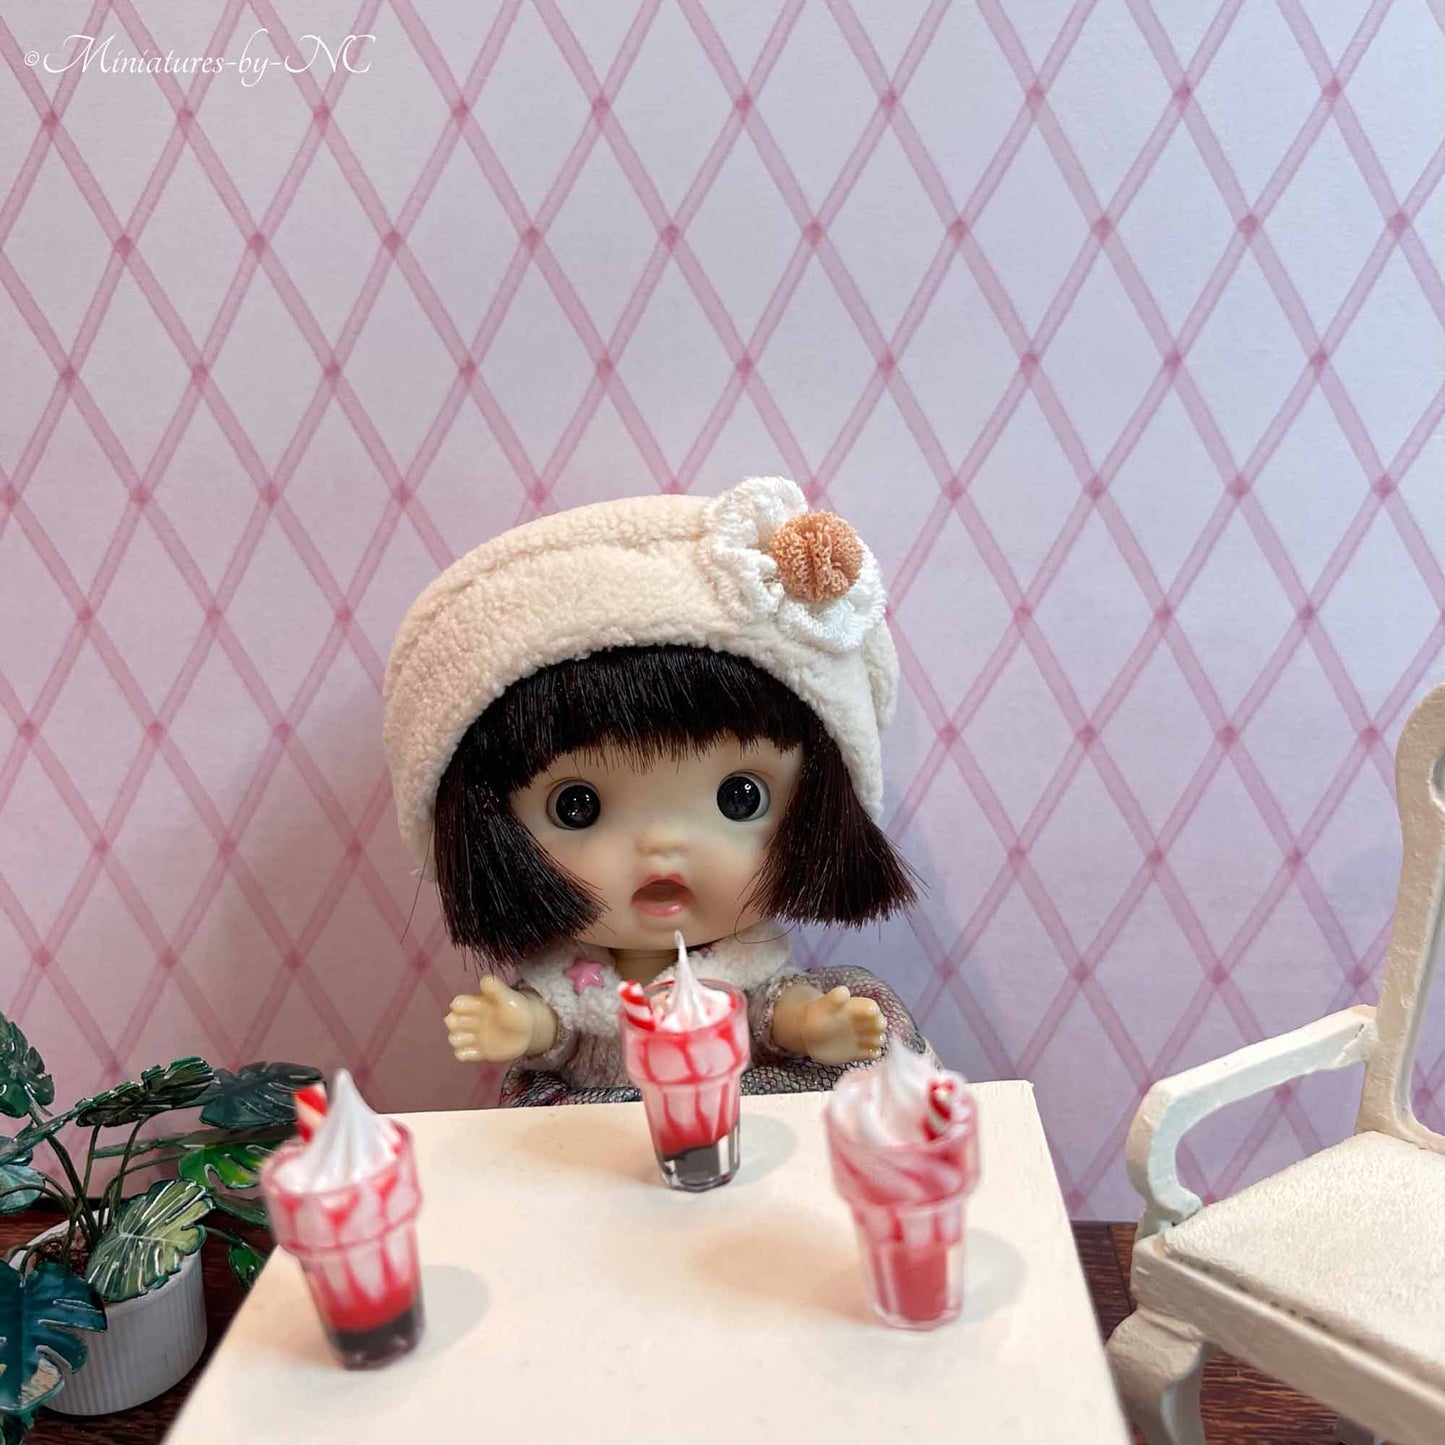 Miniature Sundae/ Ice Cream Parfait 1 12 Scale Dollhouse Accessory